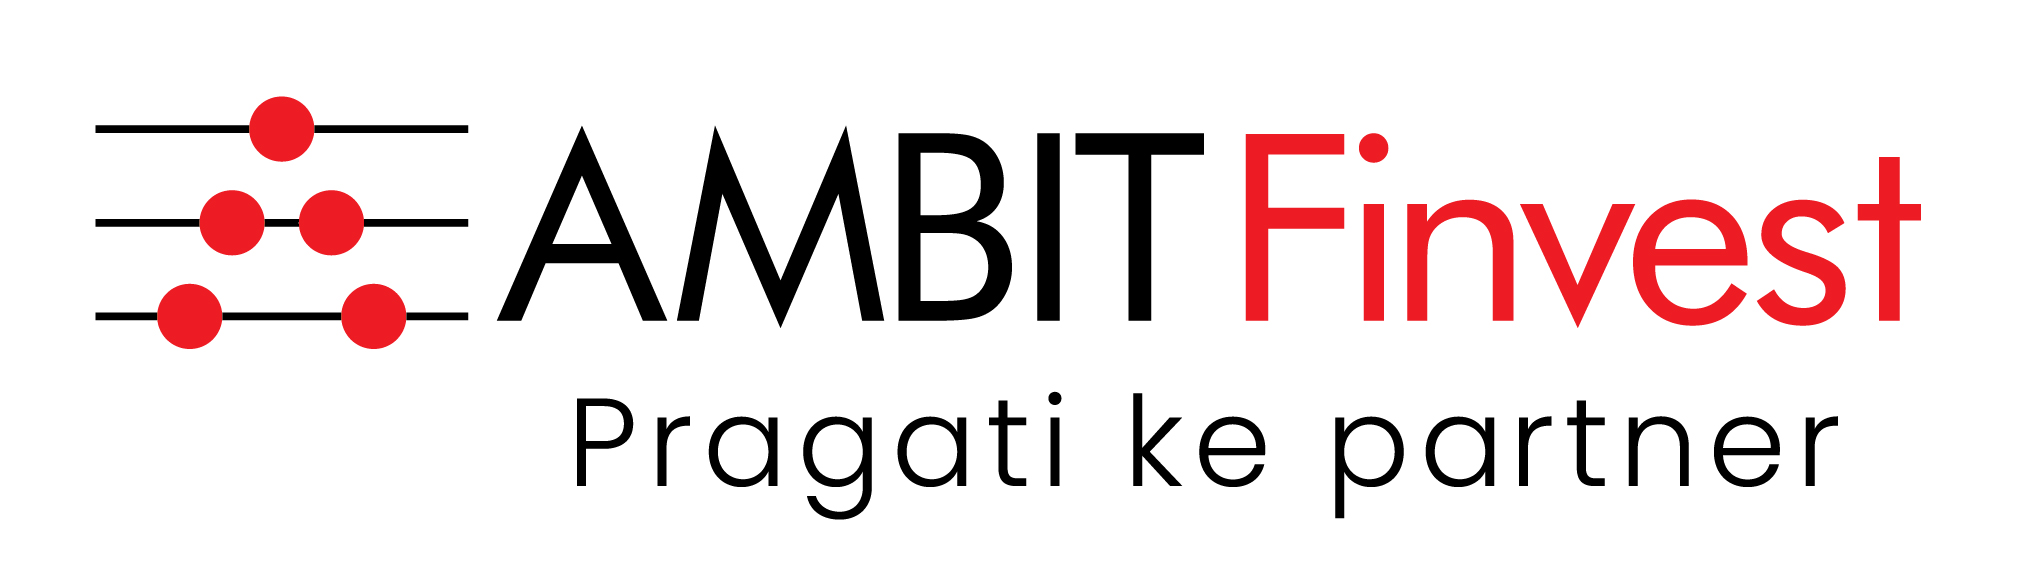 Ambit Finvest Logo